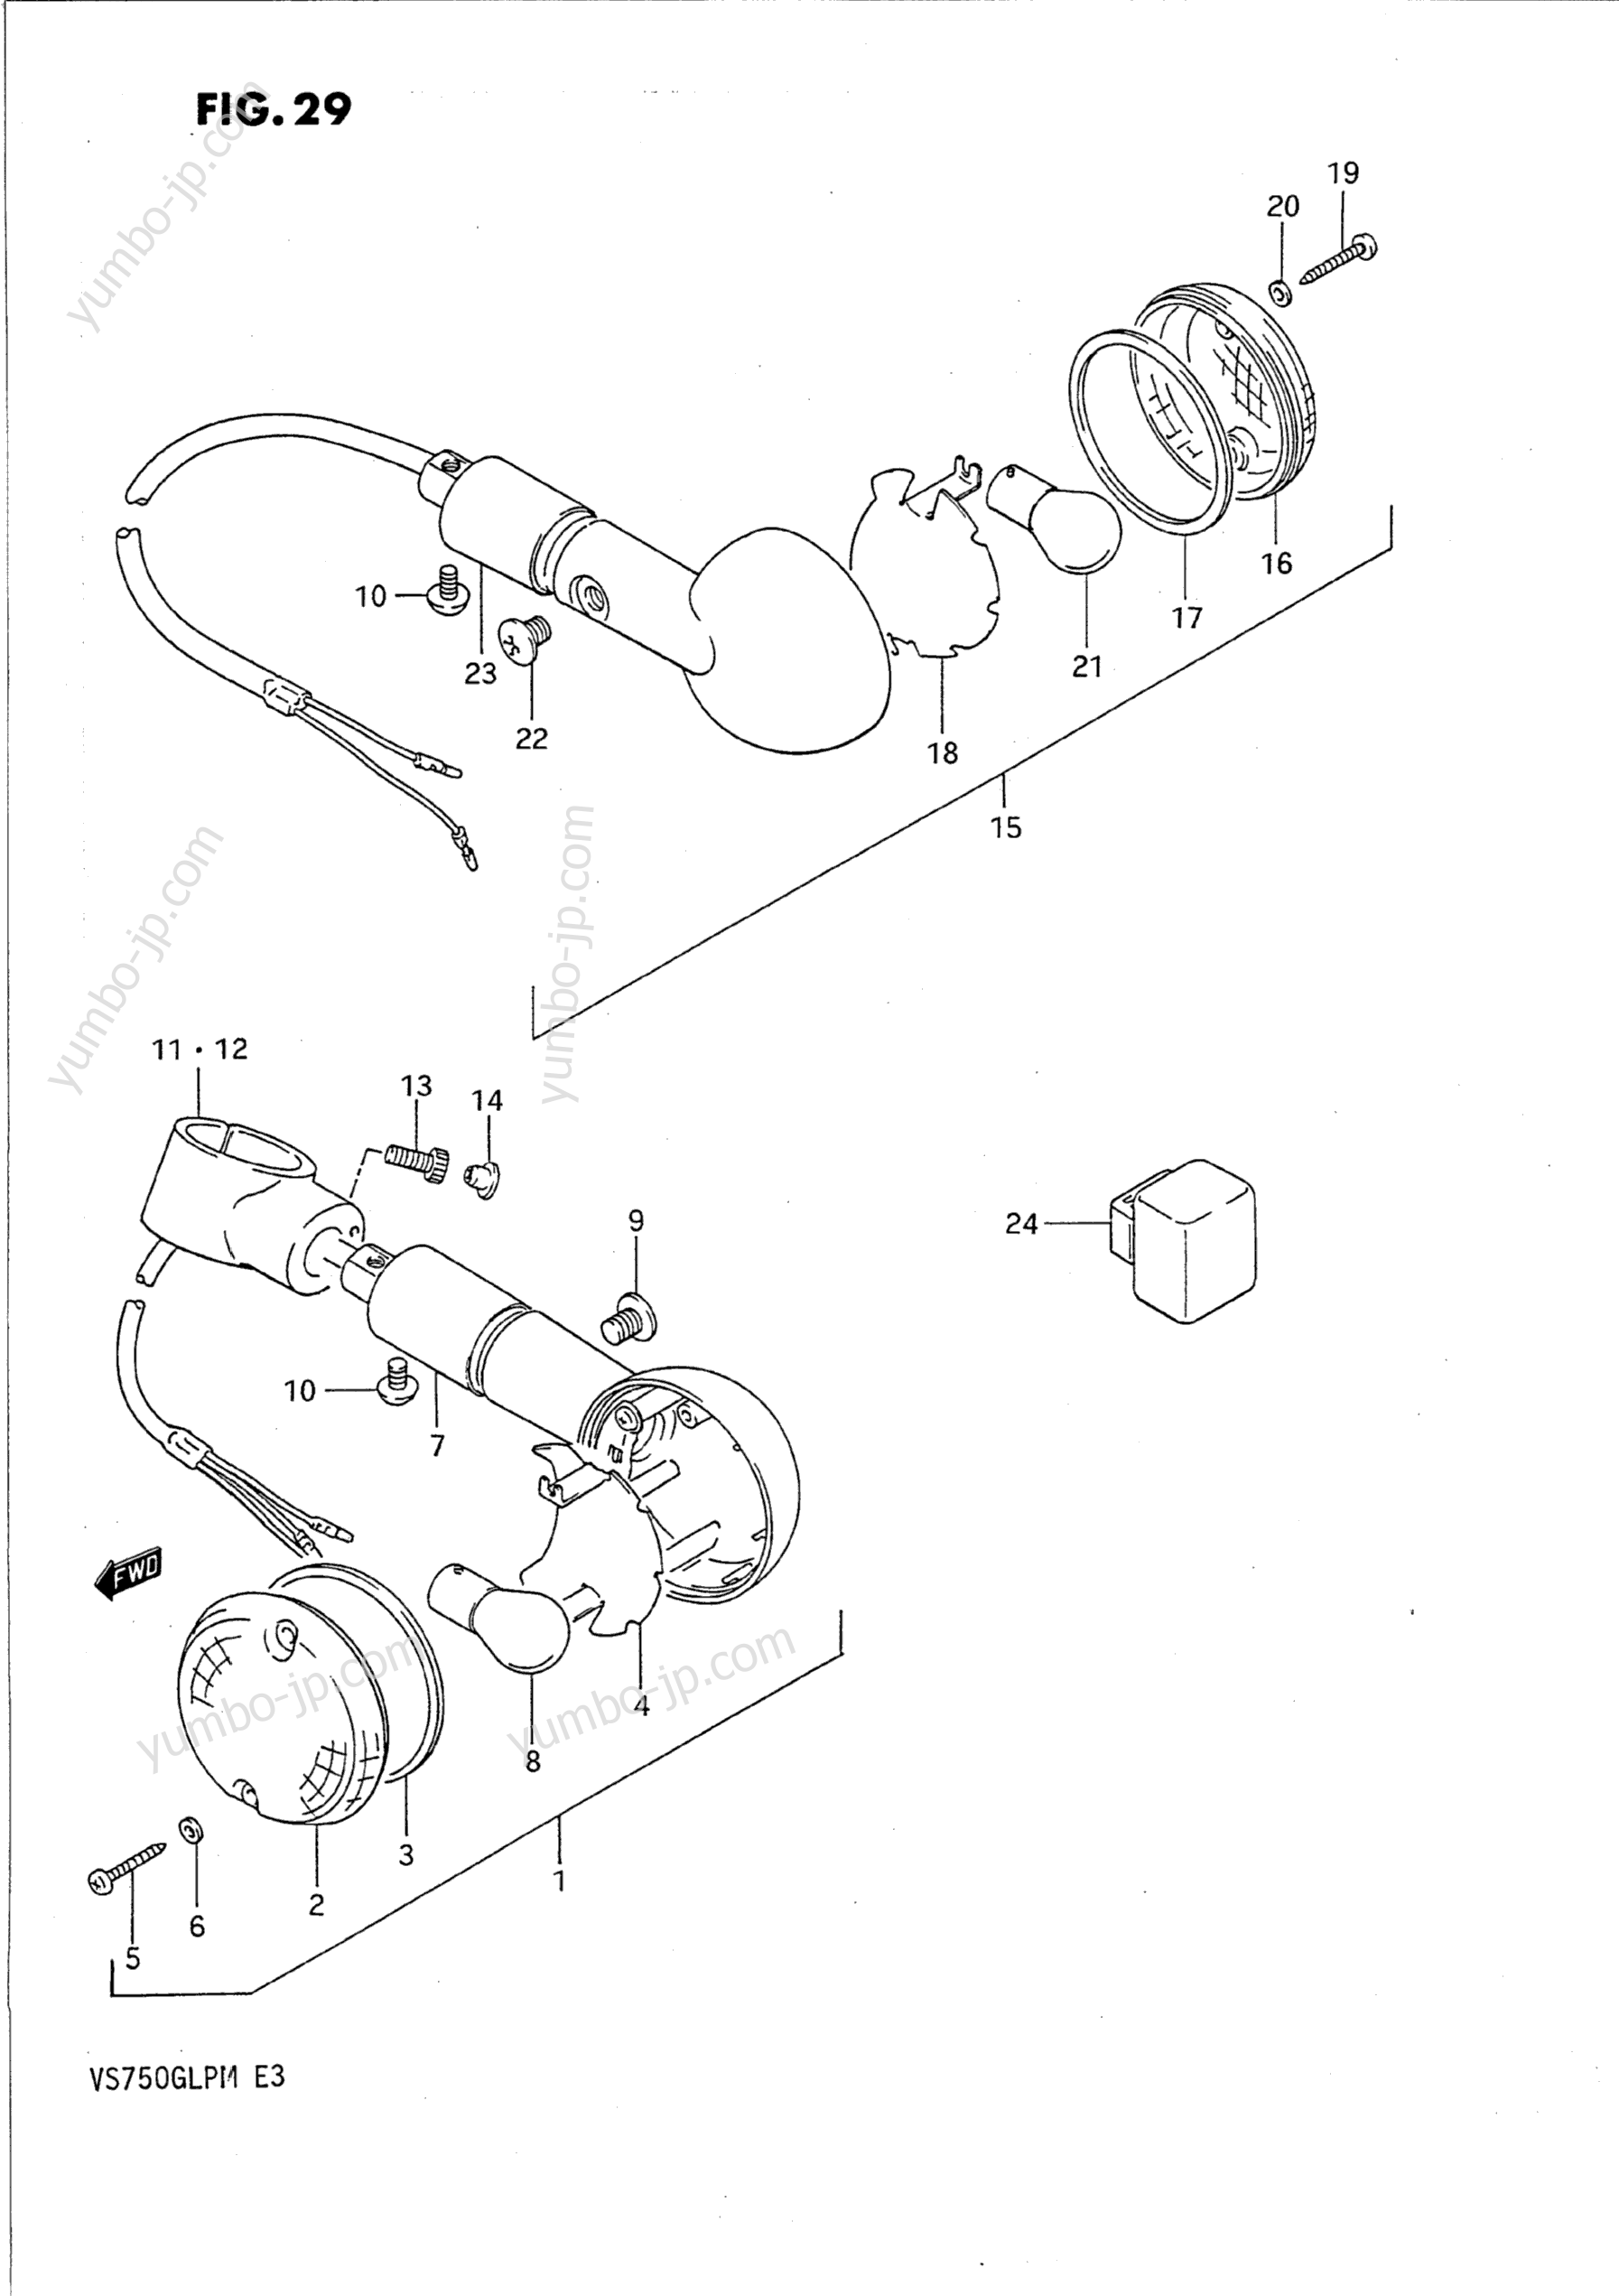 TURN SIGNAL LAMP for motorcycles SUZUKI Intruder (VS750GLP) 1990 year